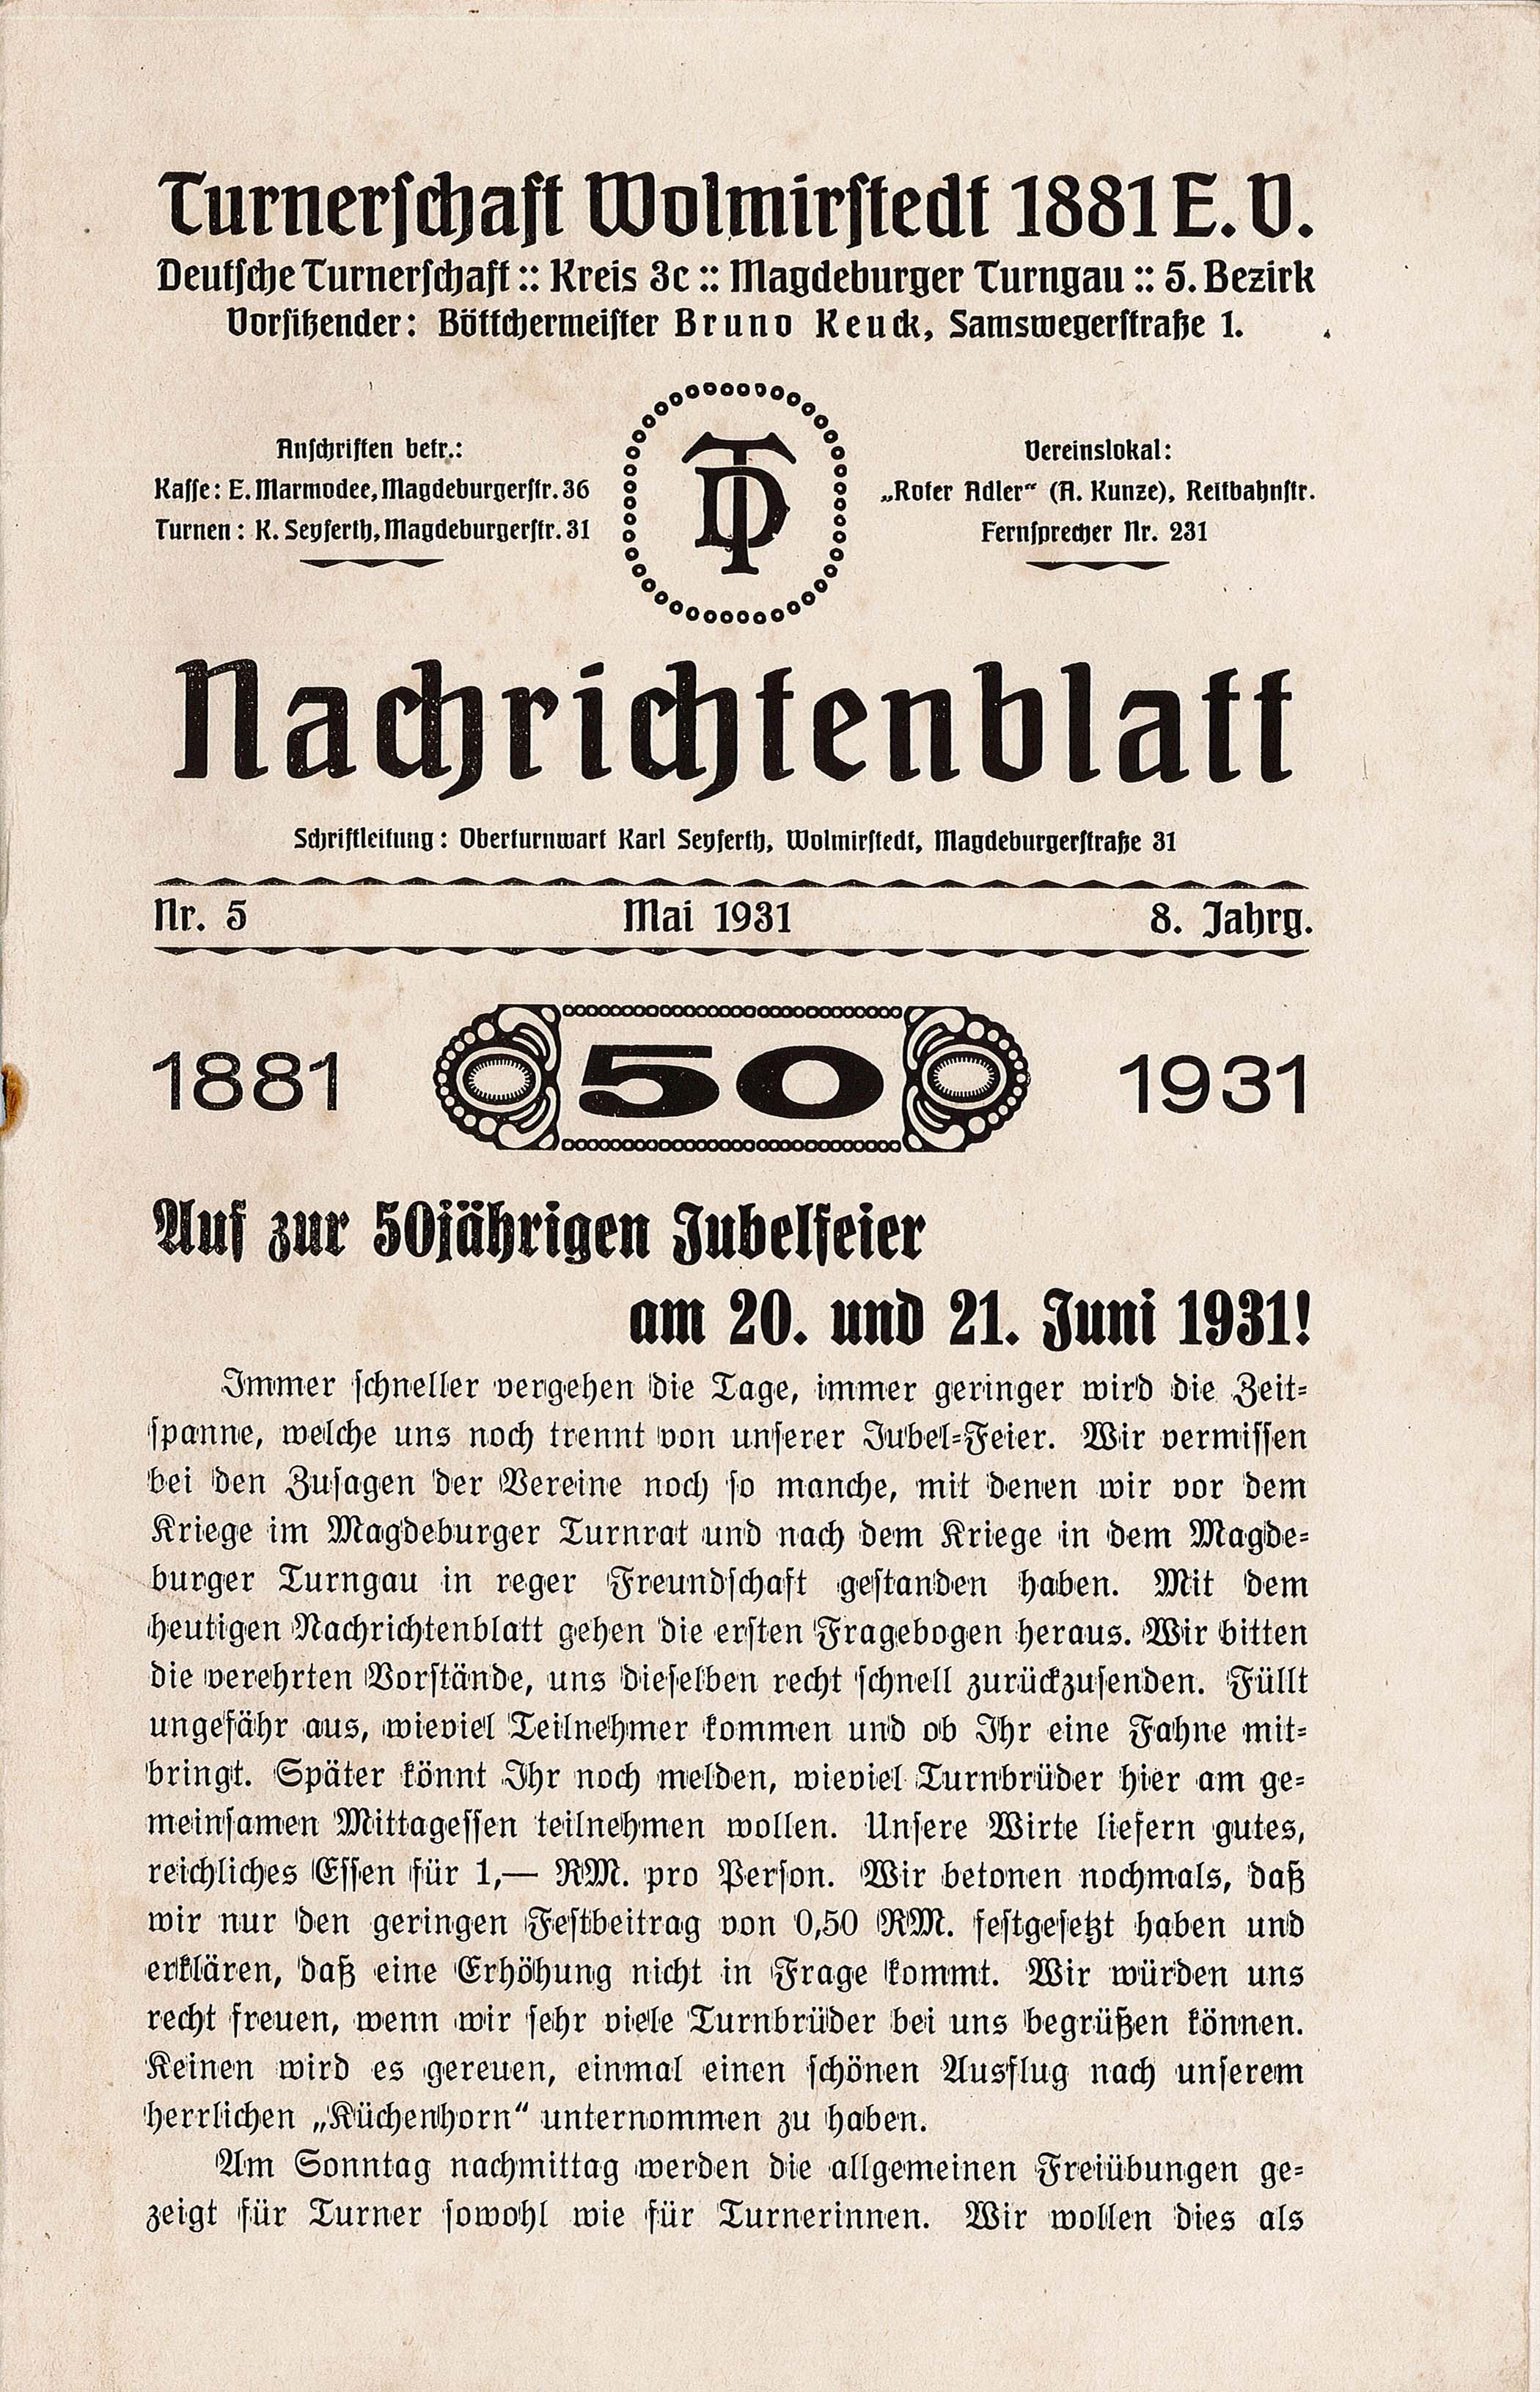 Nachrichtenblatt Turnerschaft 1881 e. V. (Museum Wolmirstedt RR-F)